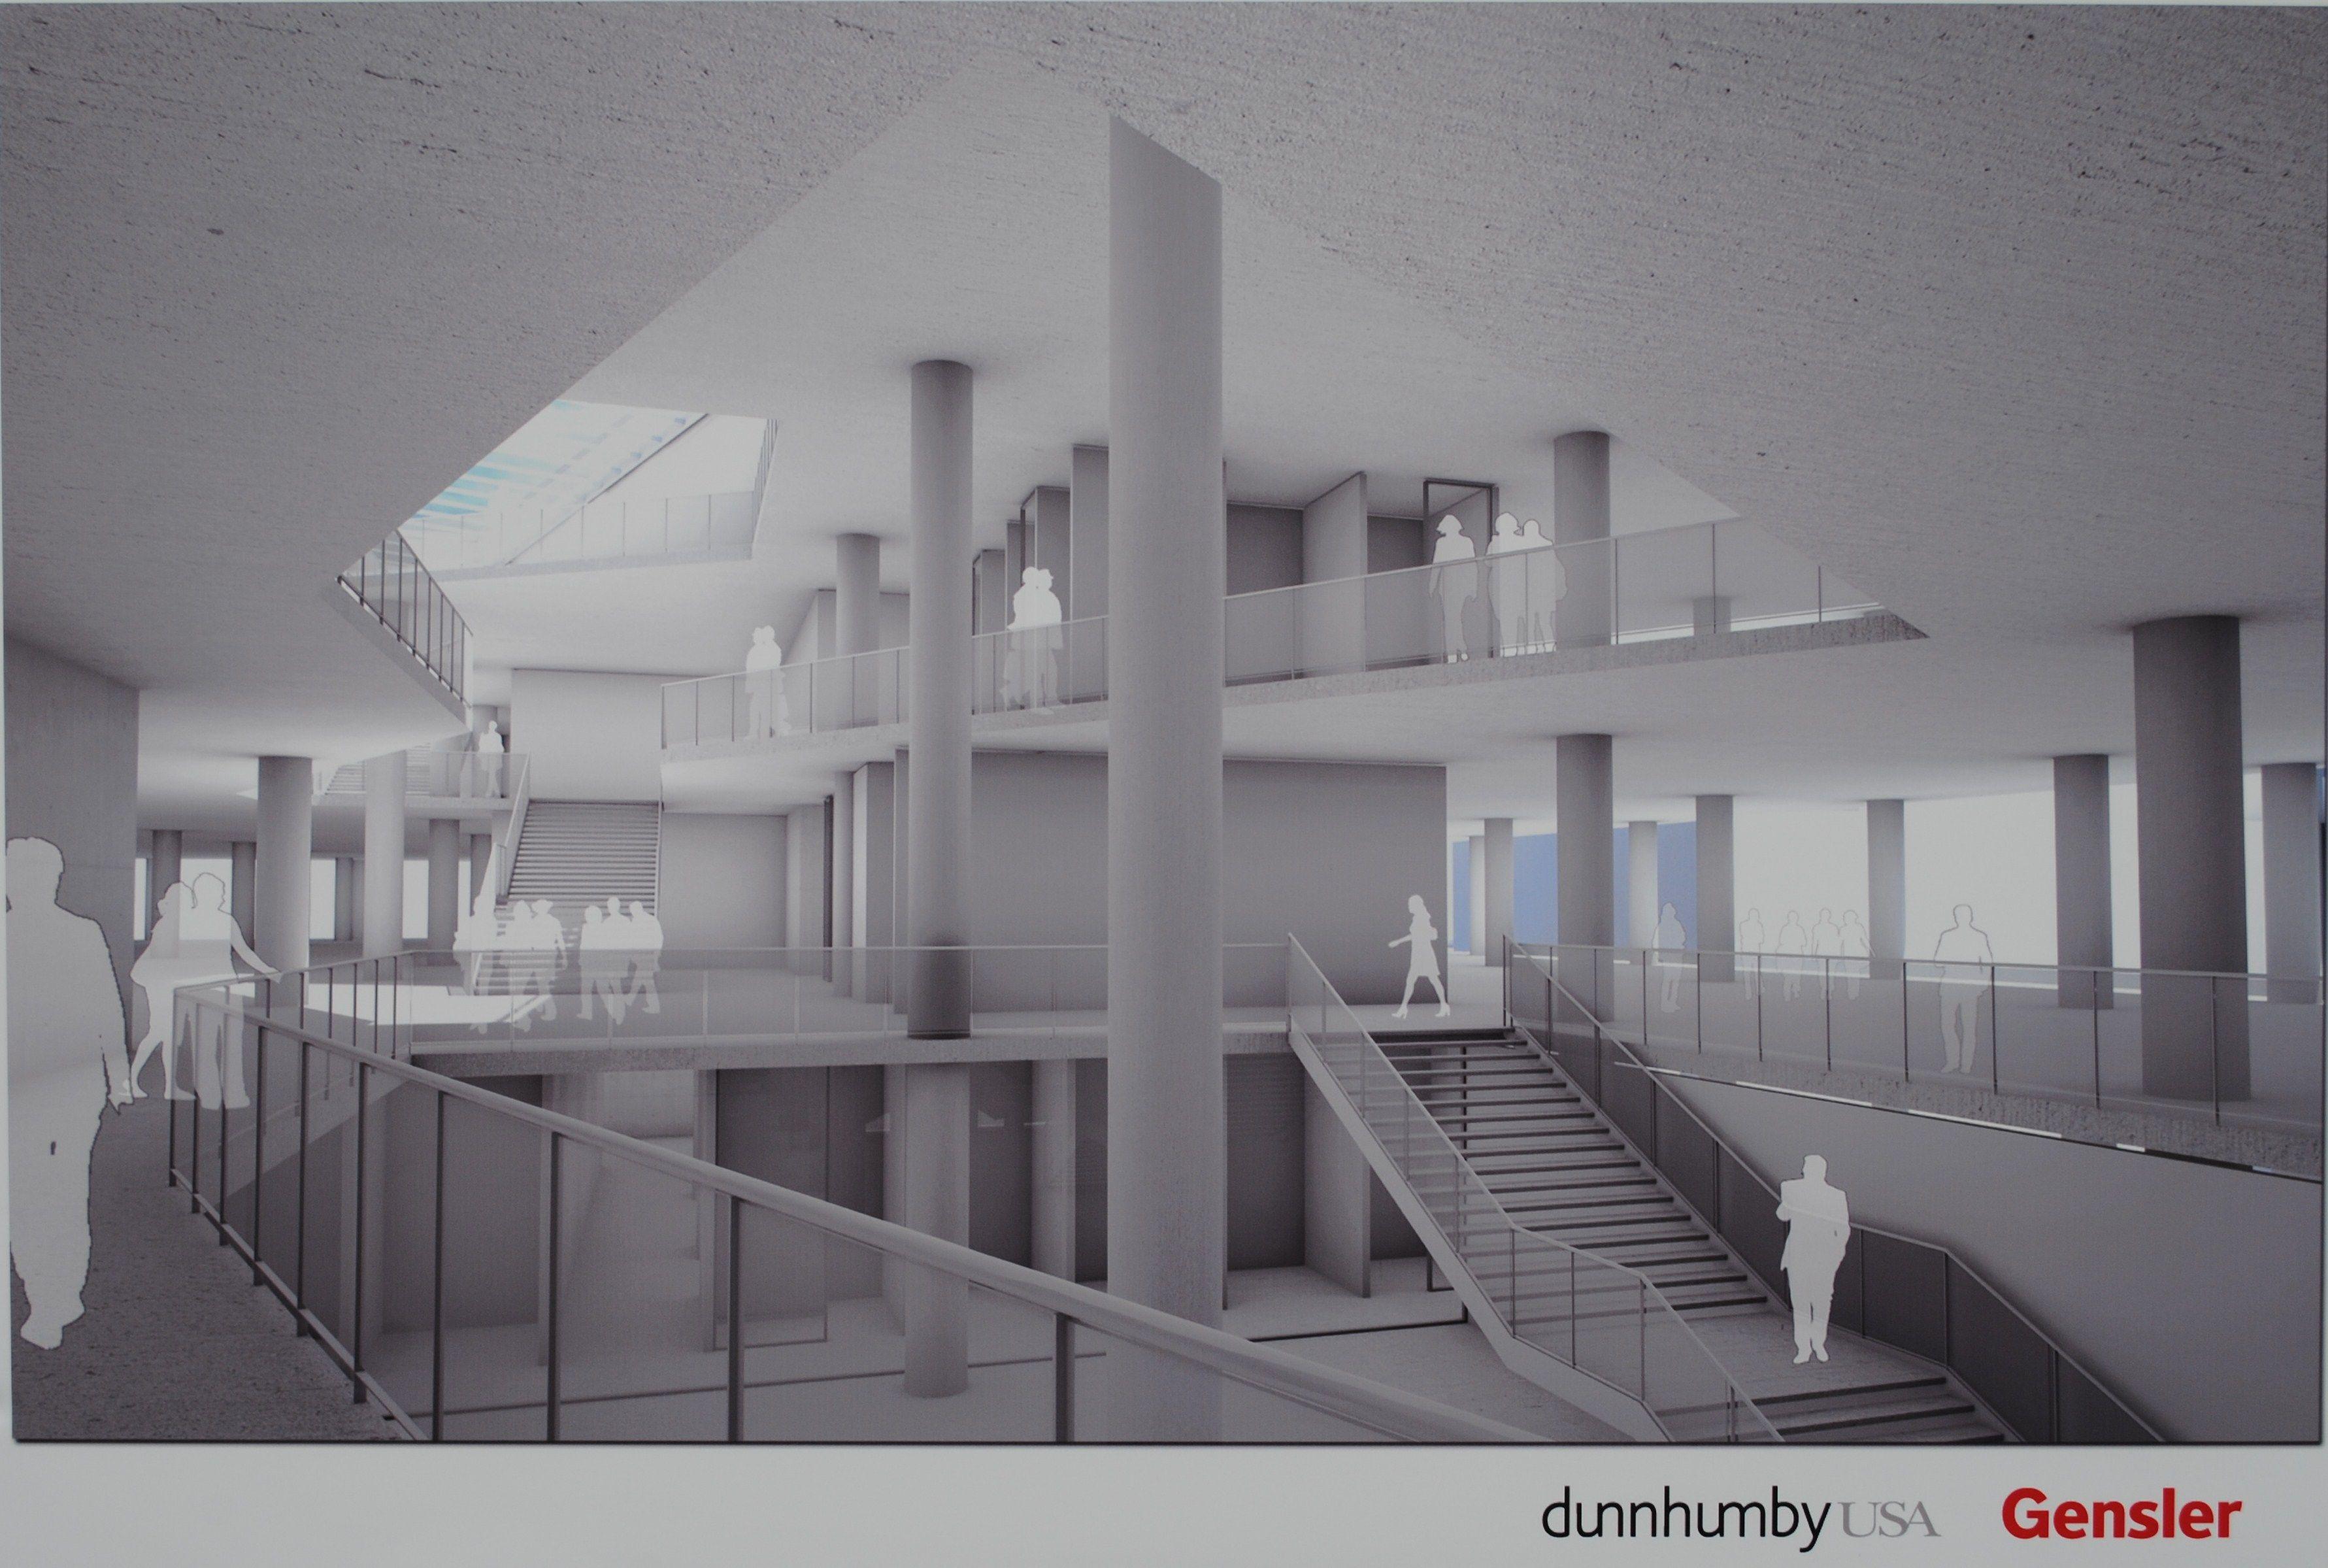 Dunnhumbyusa Logo - Design work continues on dunnhumbyUSA building